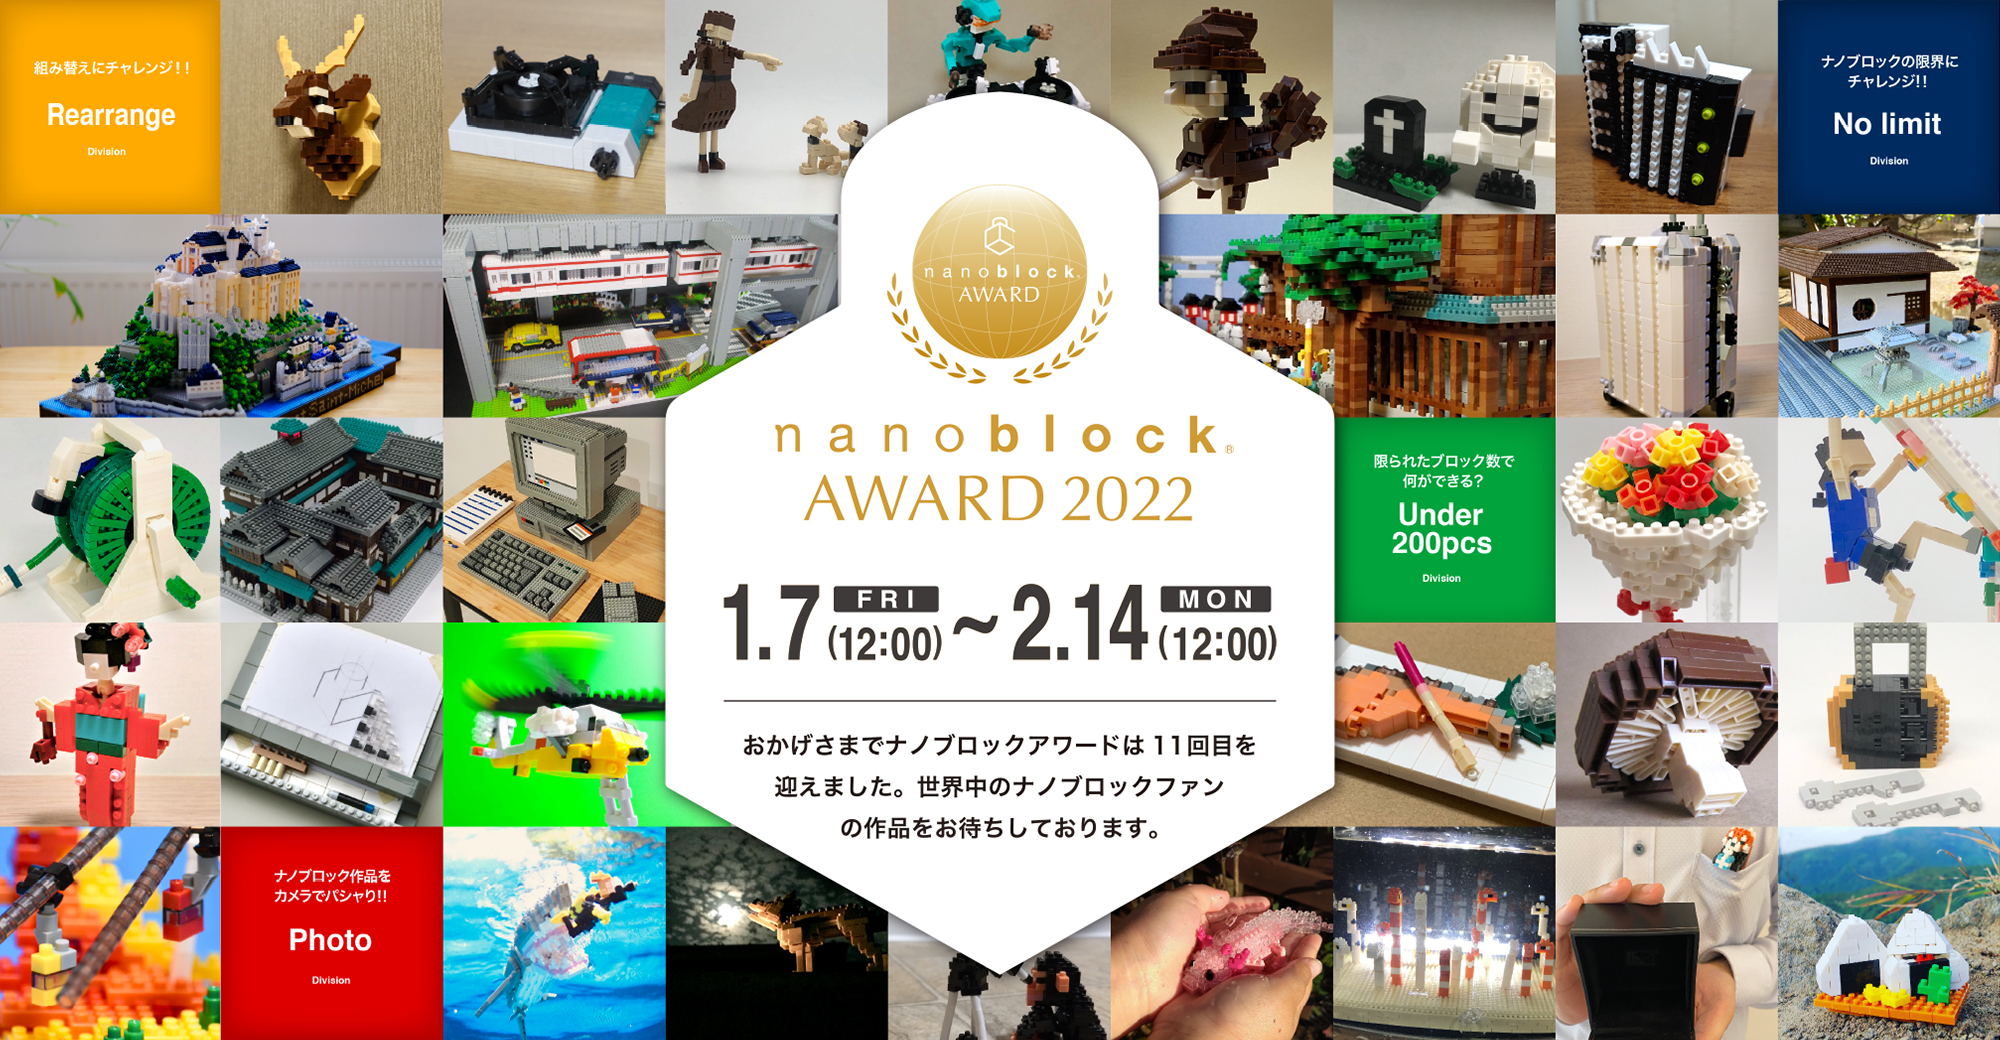 nanoblock award 2022